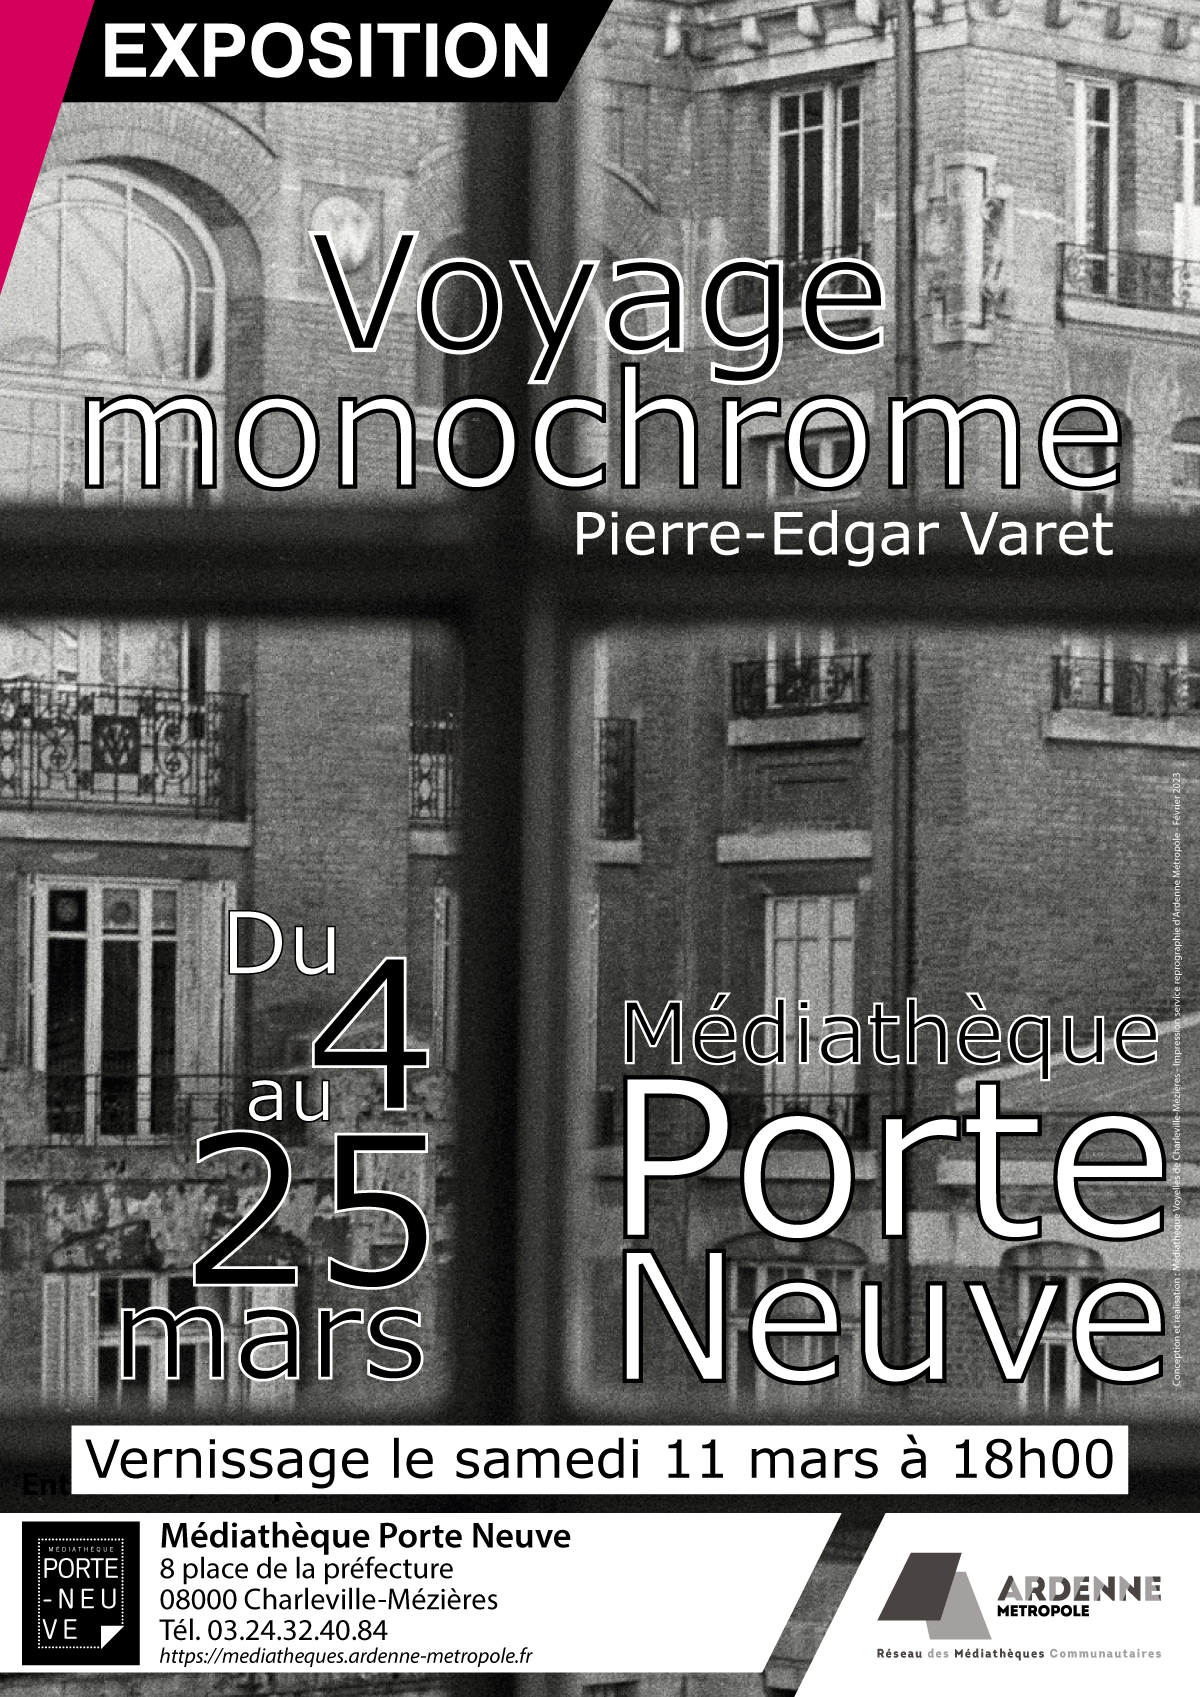 Expo Voyage Monochrome